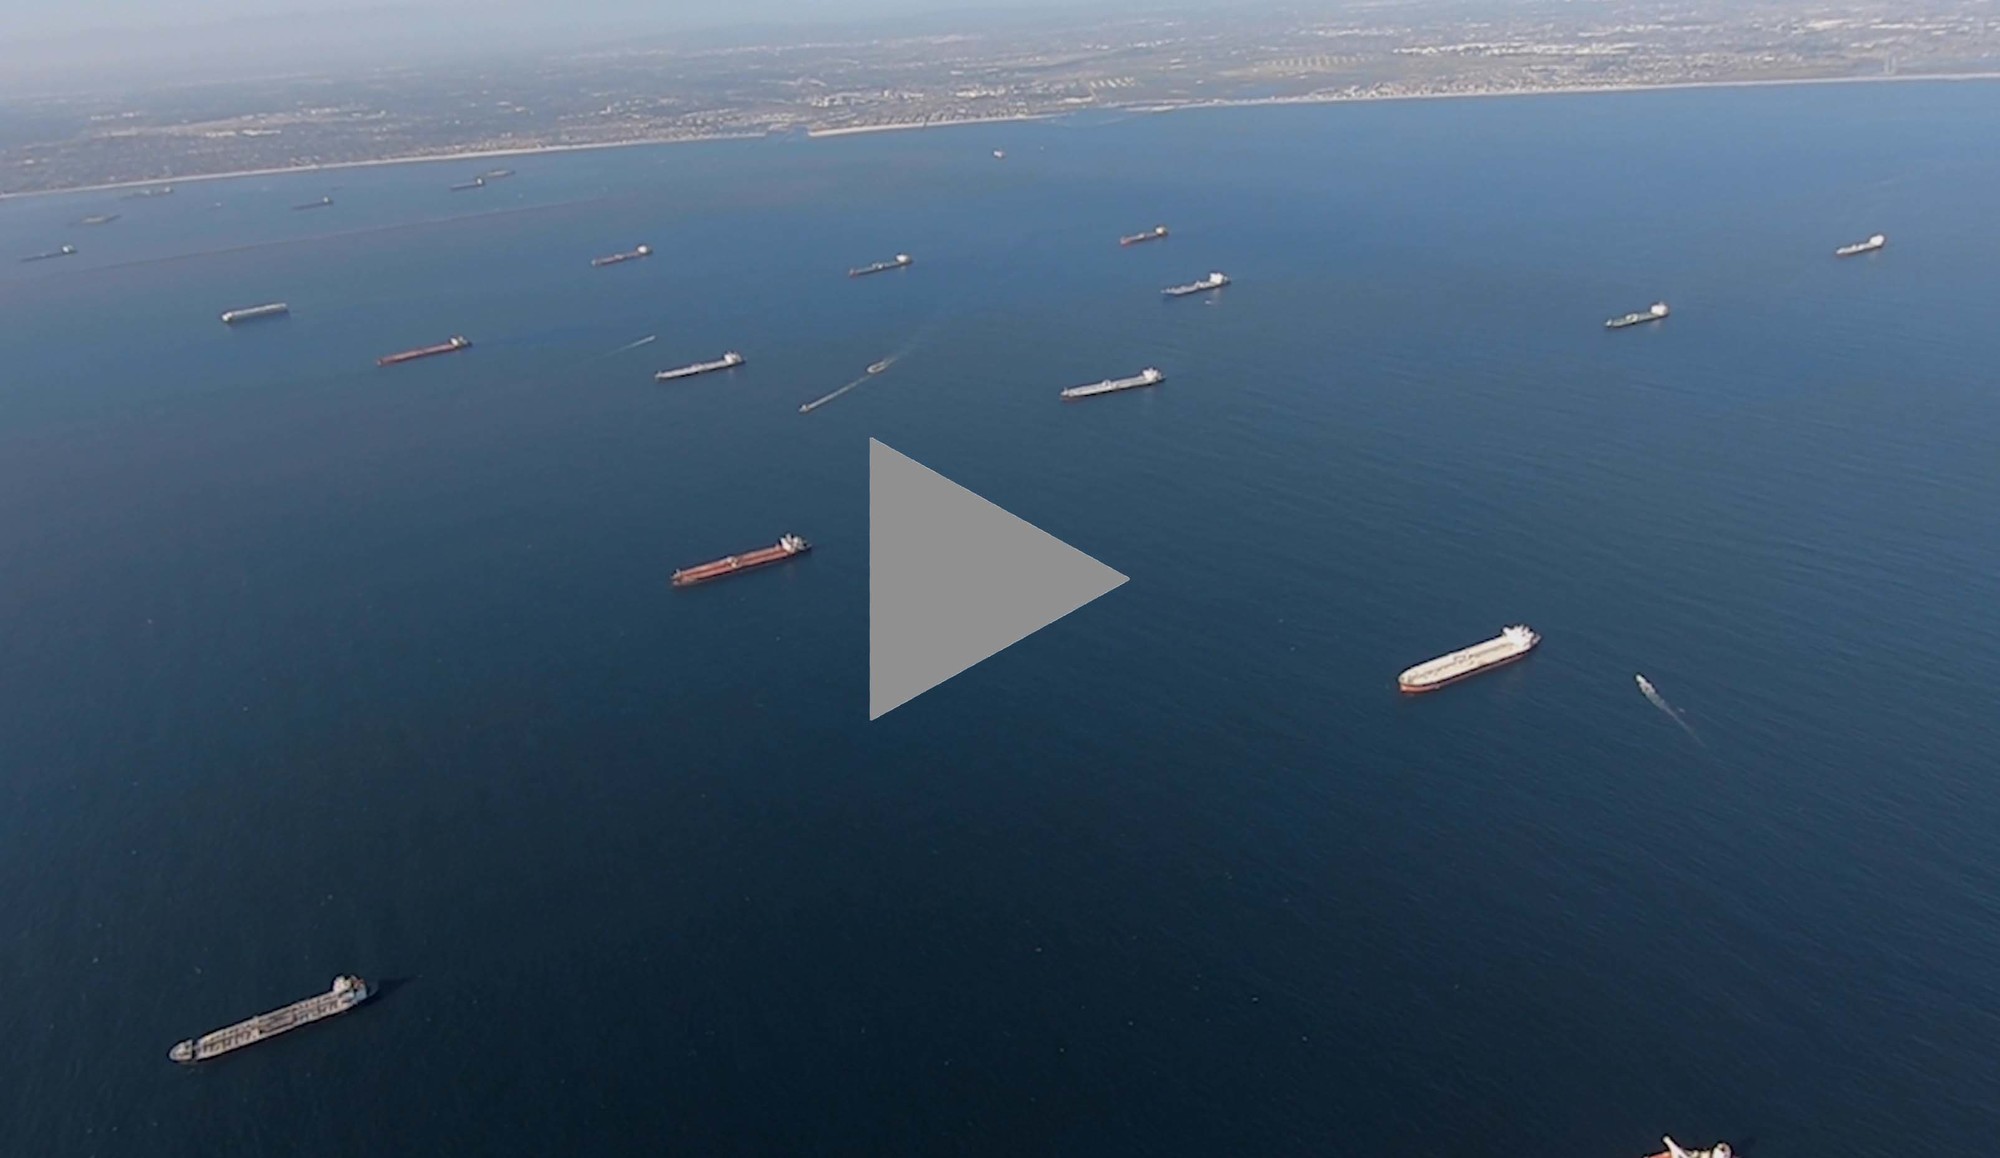 screenshot of video showing tanker vessels off SoCal coast